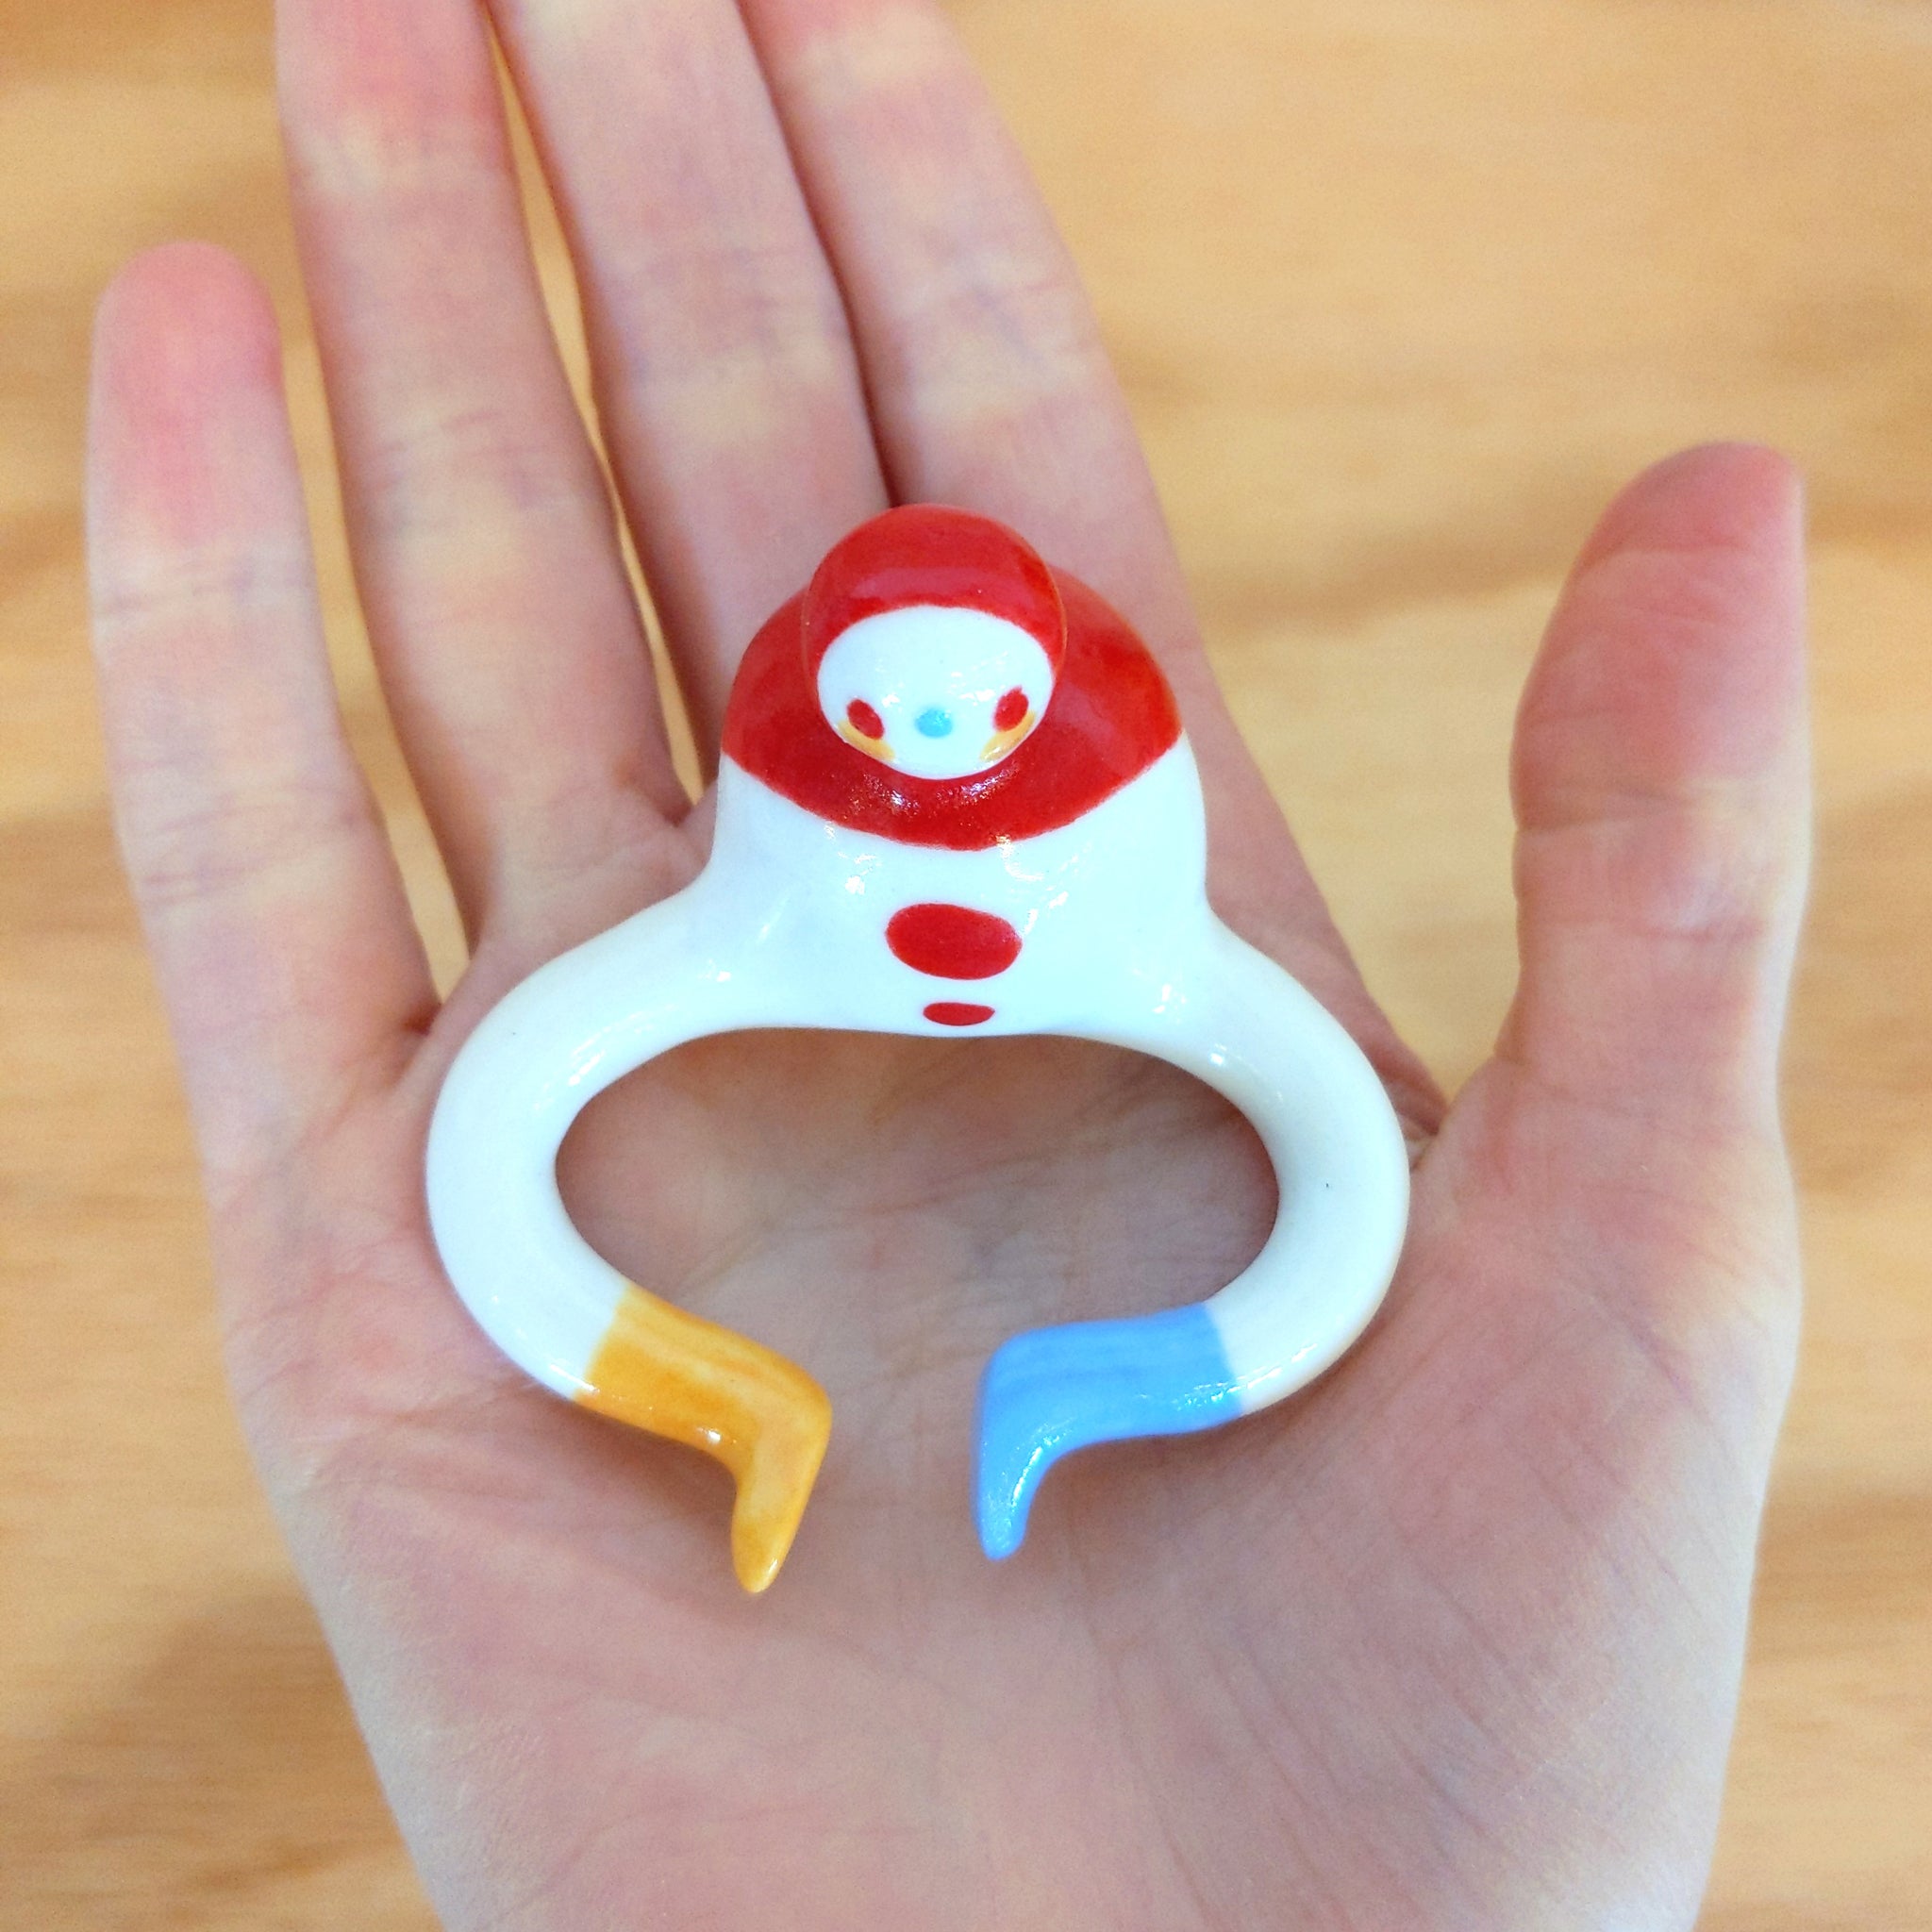 Tinybirdman Ceramic Art Toy [22.021: Classic in Red]